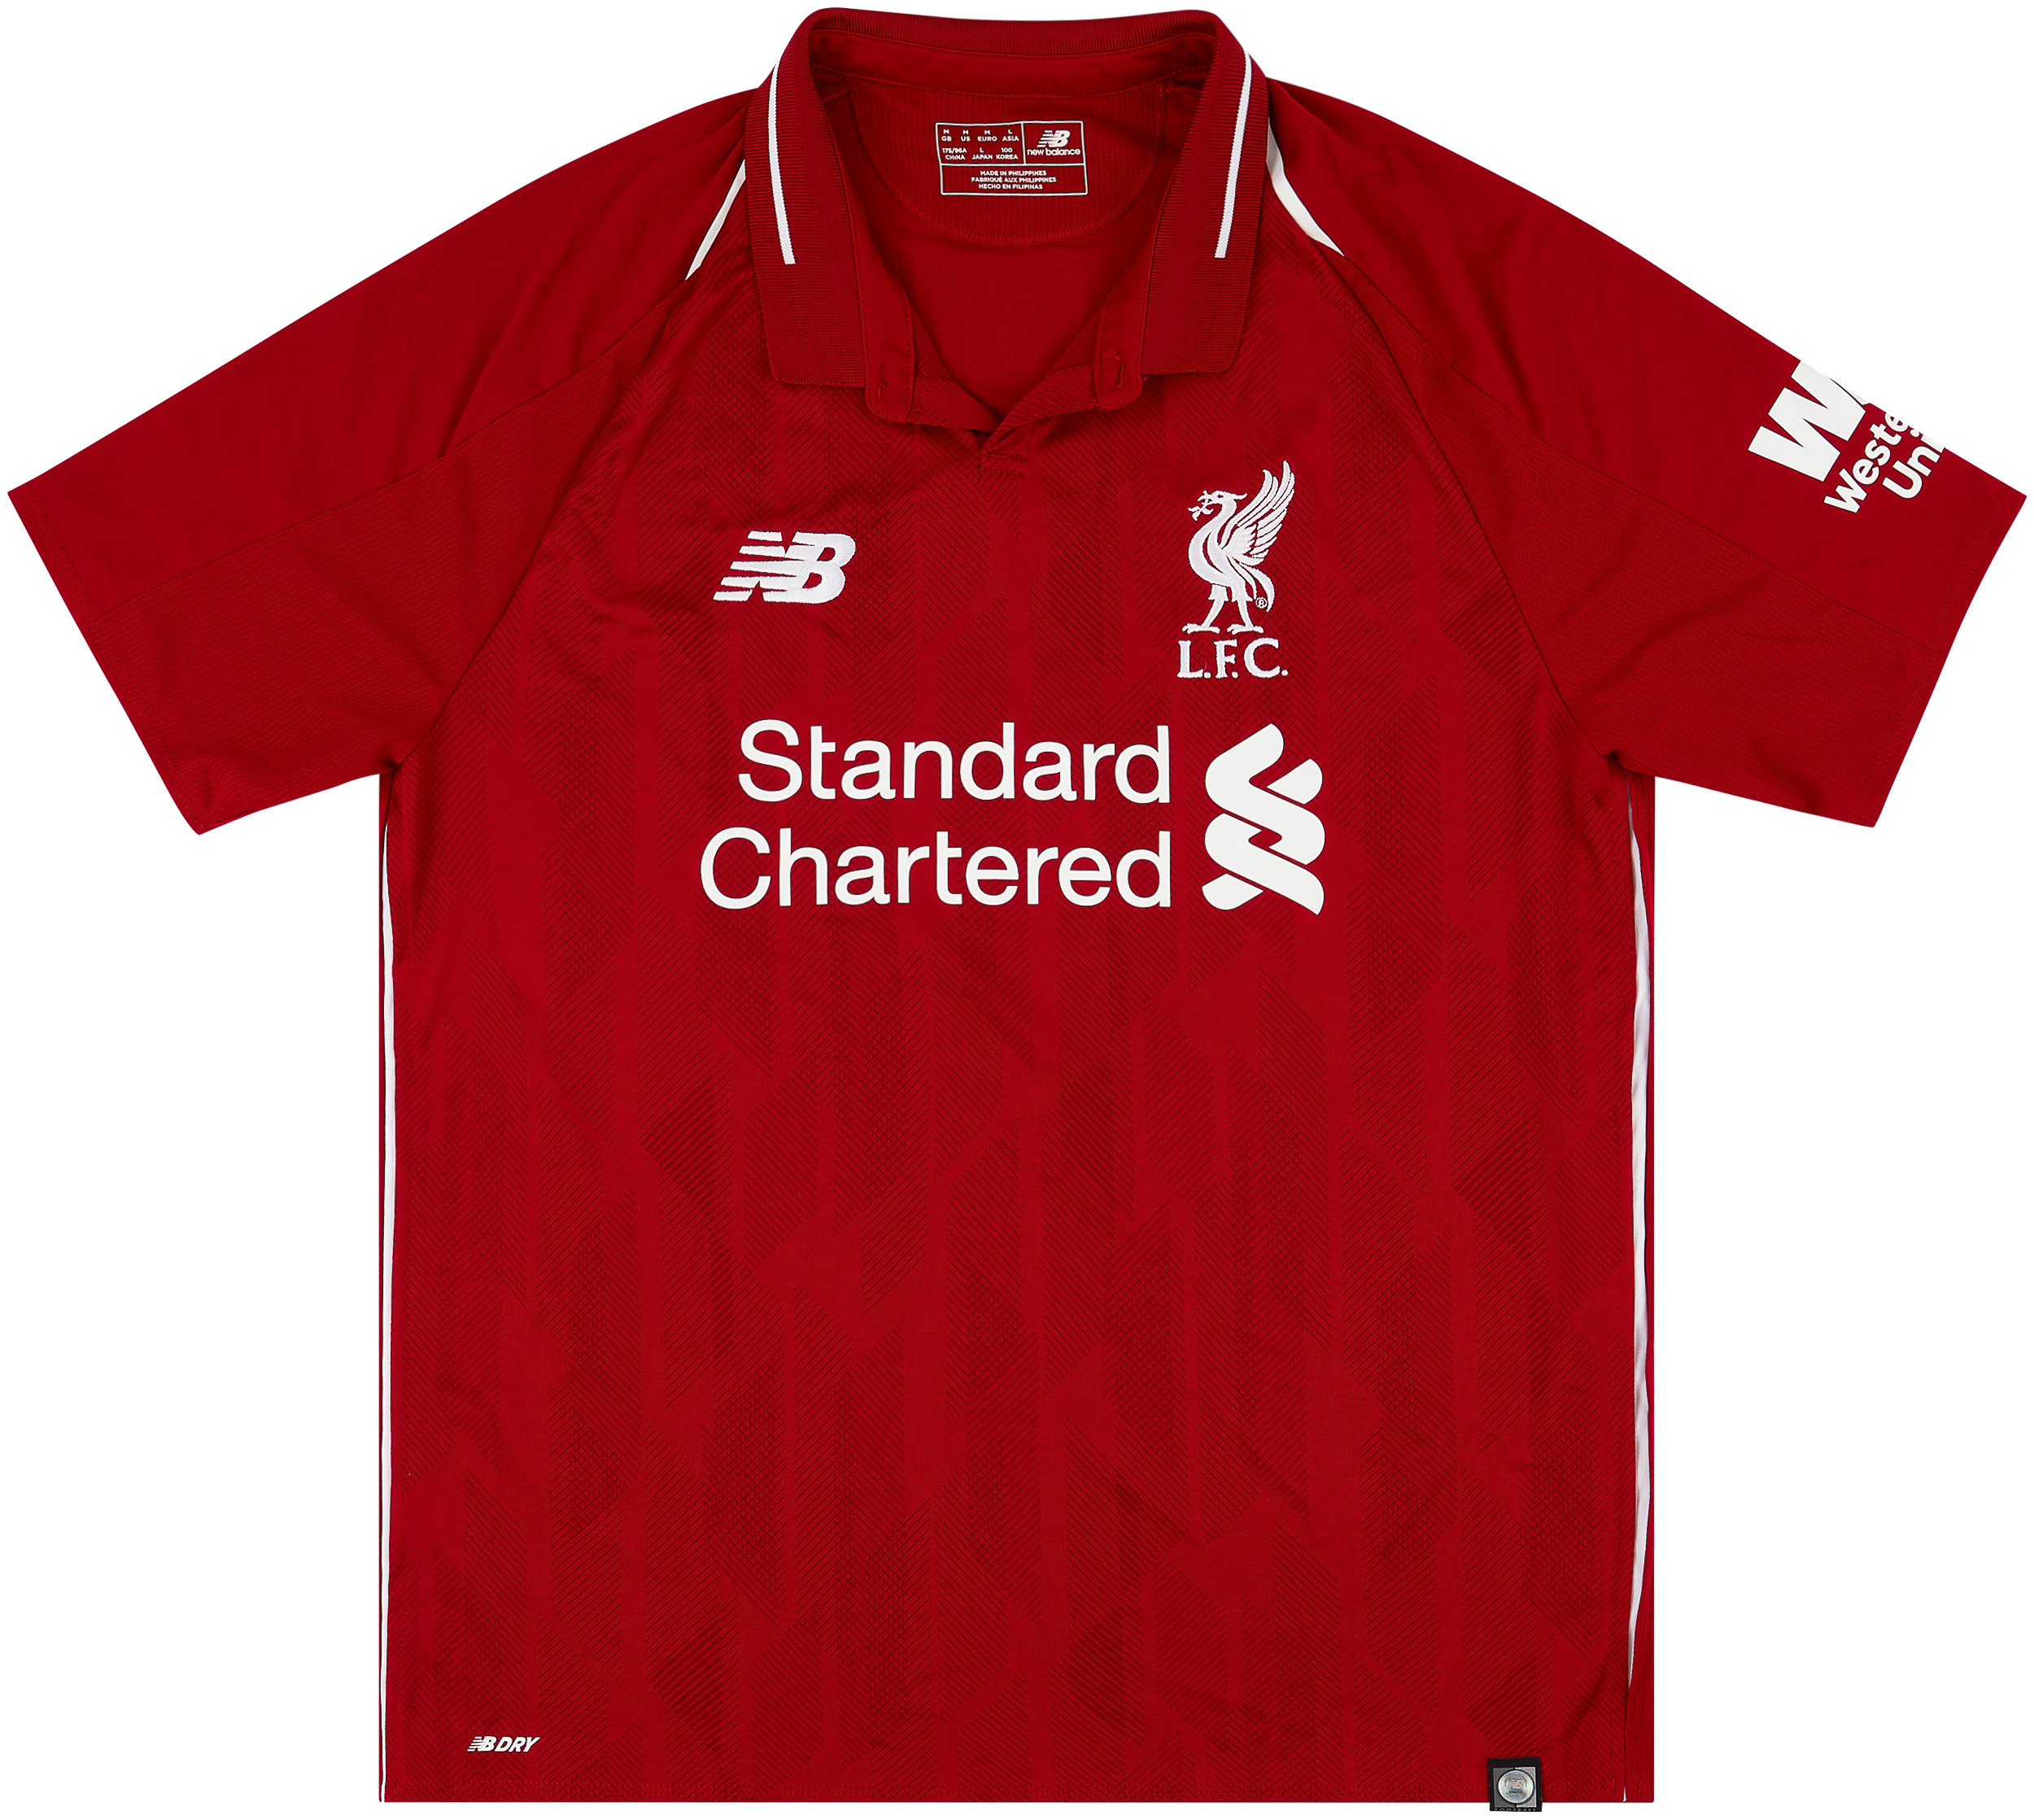 2018-19 Liverpool Home Shirt - Very Good 7/10 - ()